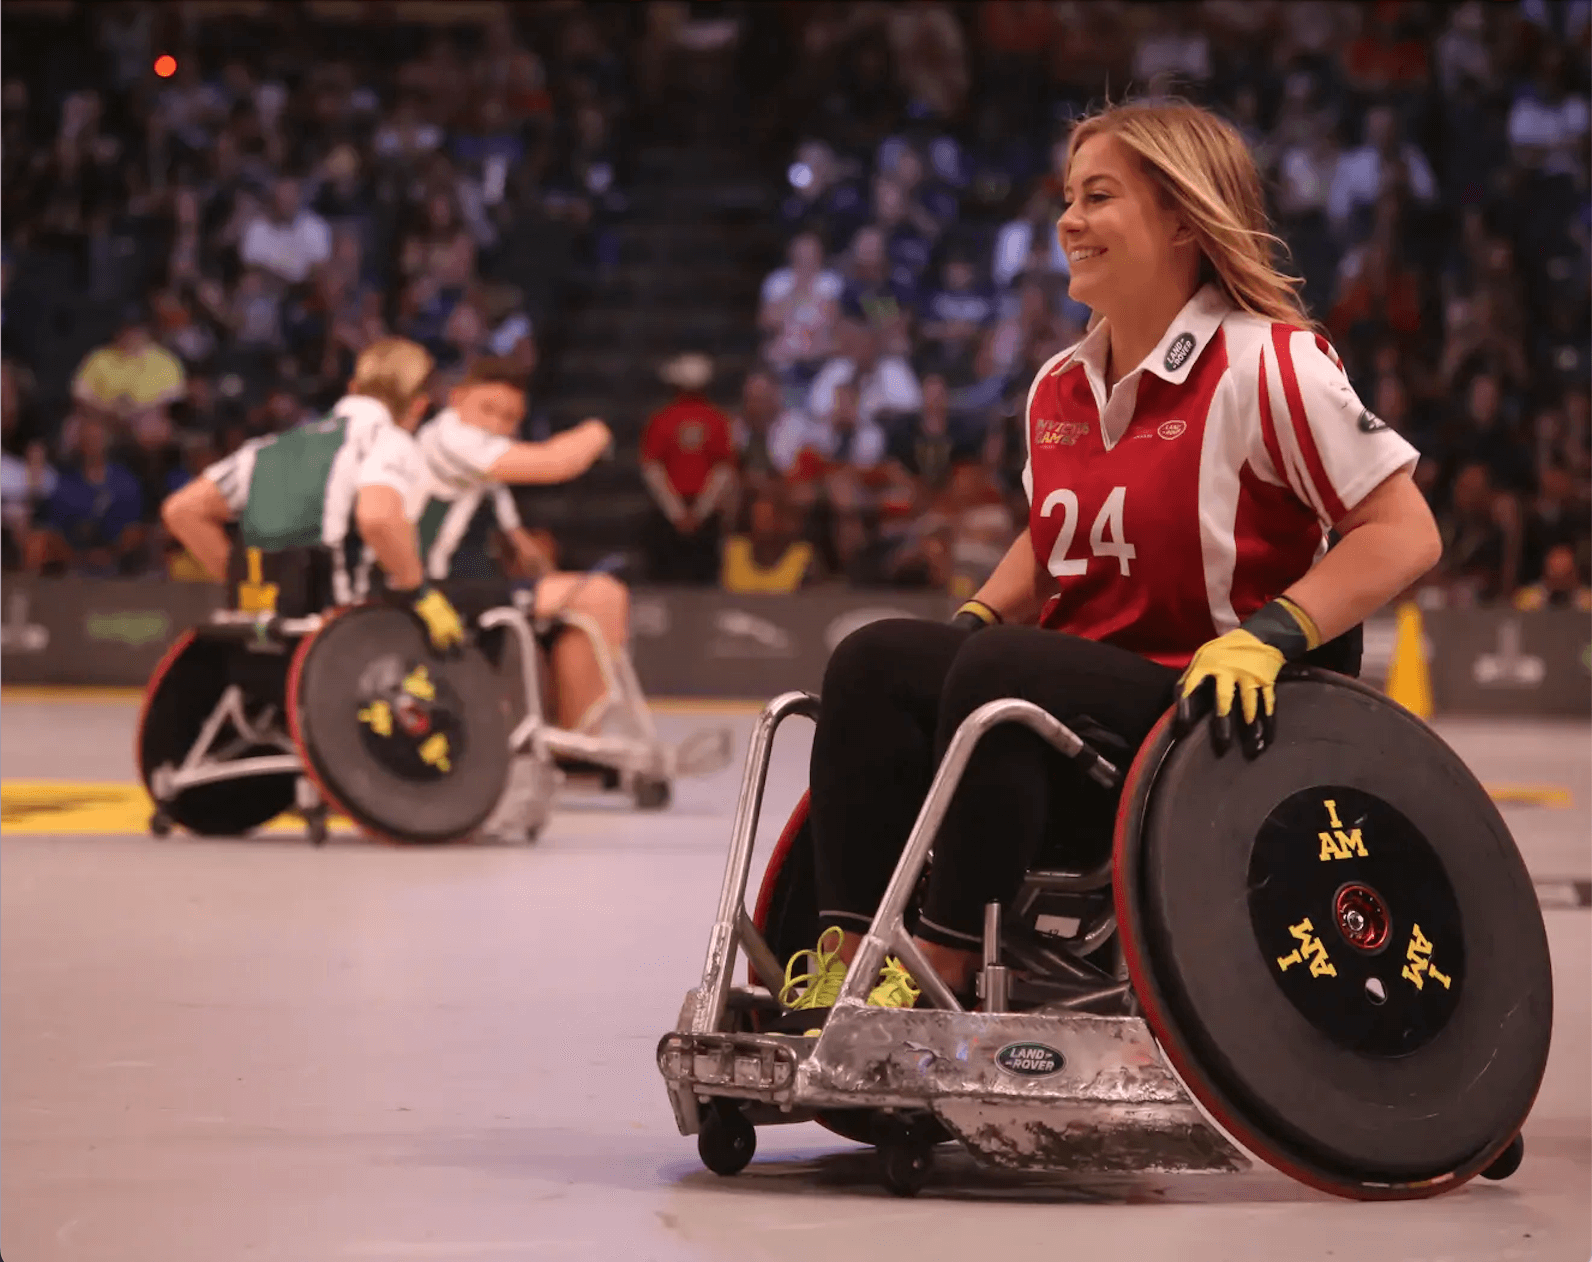 fauteuil-basket femme-pixabay